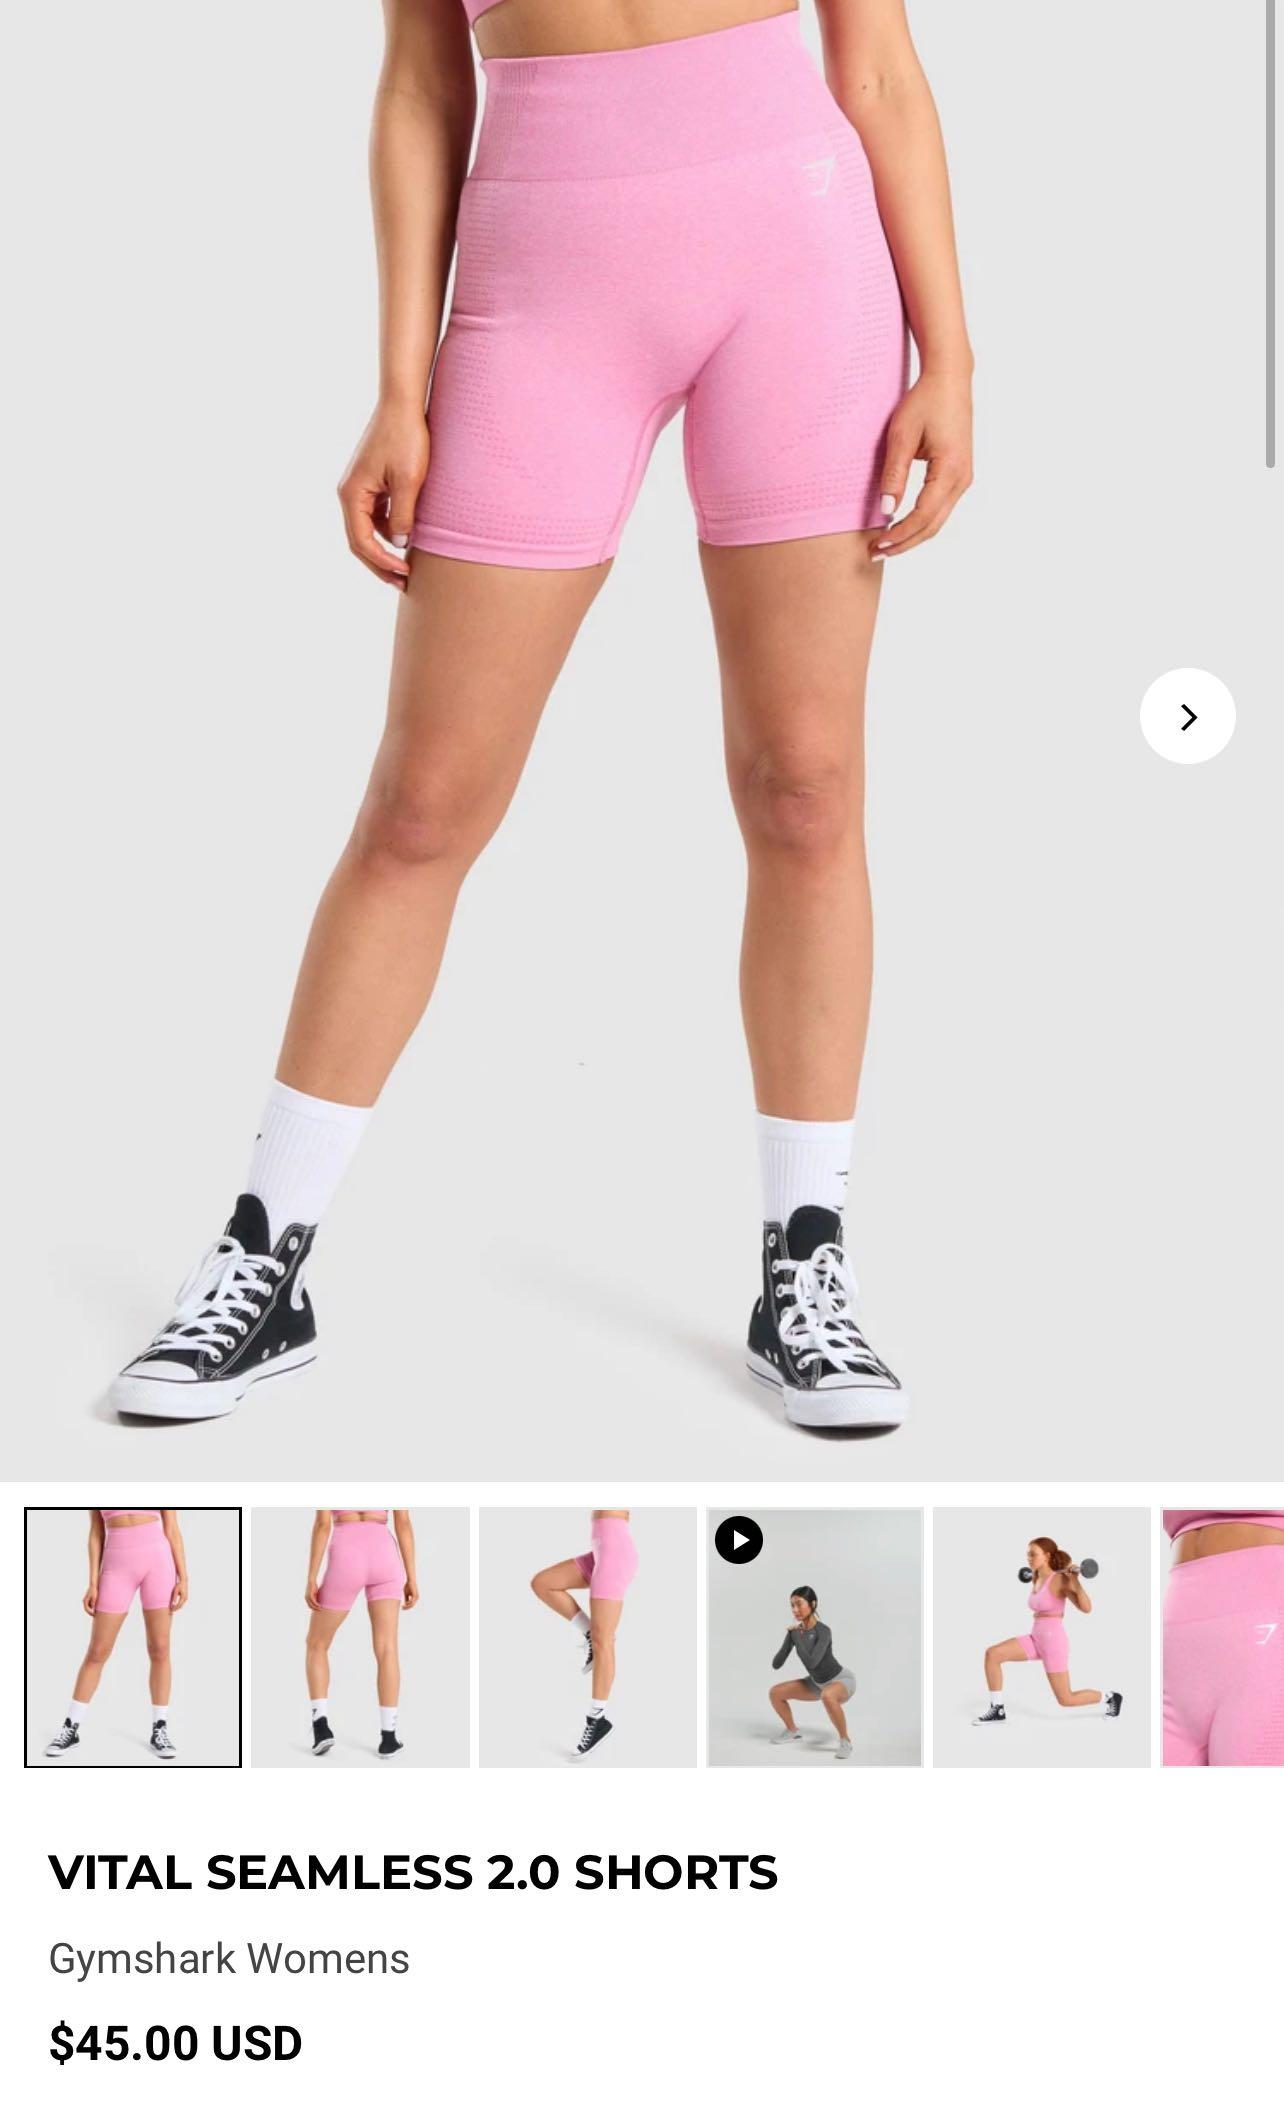 Gymshark Vital Seamless 2.0 Shorts Pink Marl, Women's Fashion